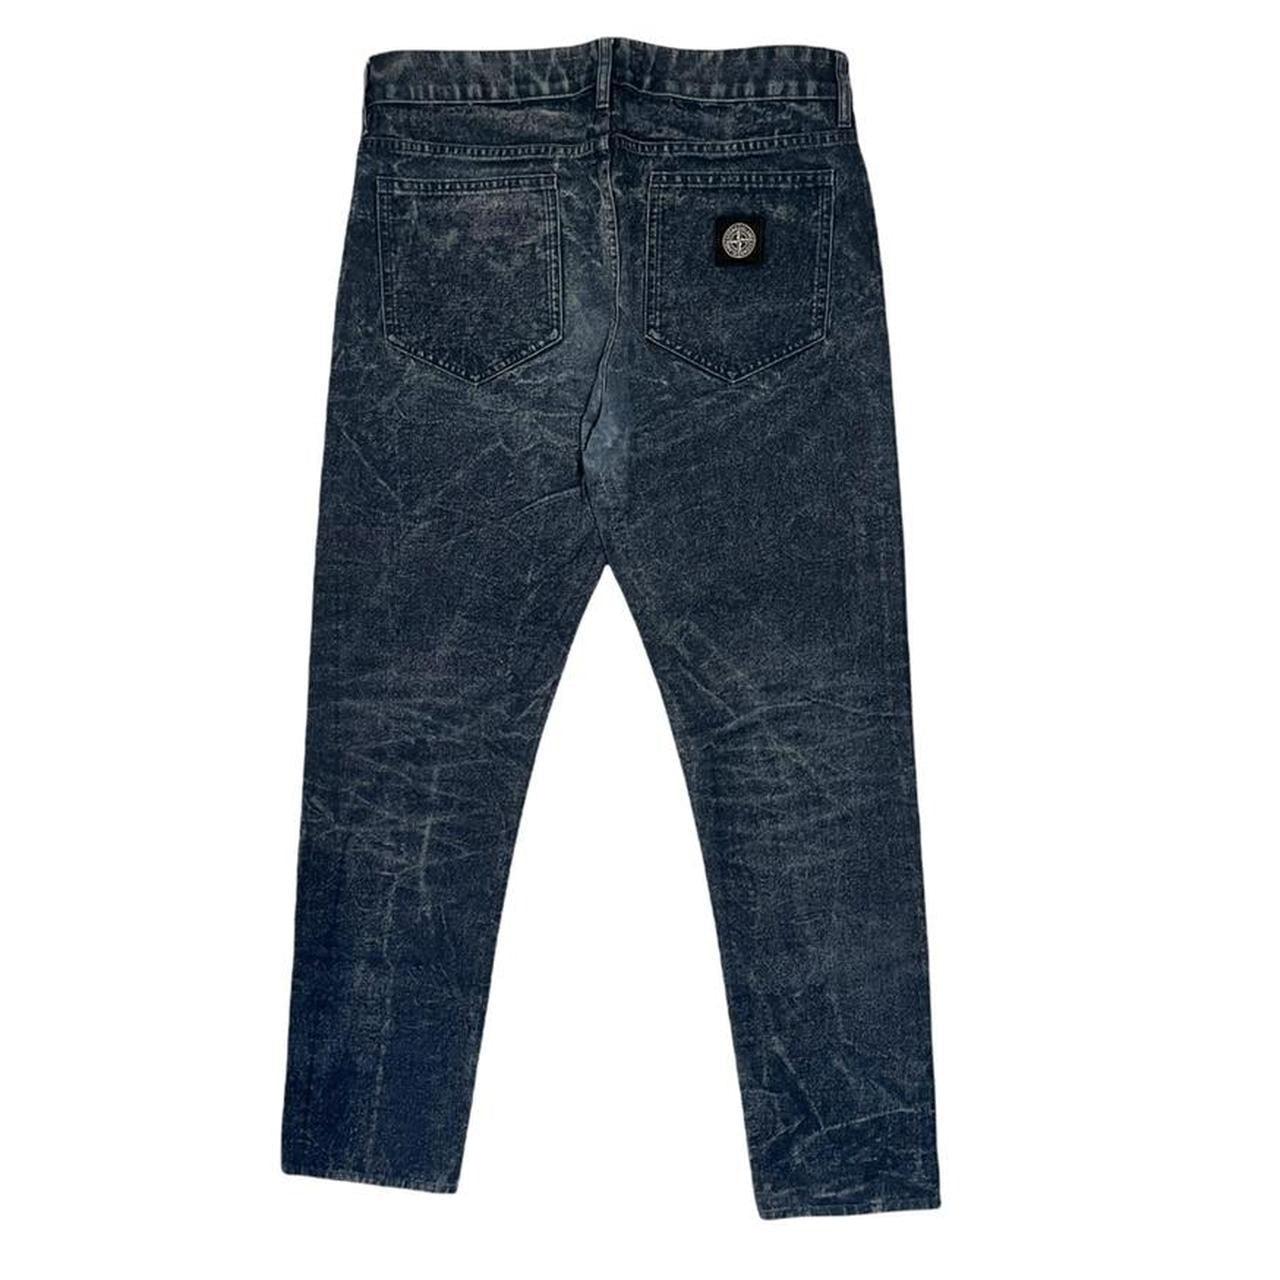 Stone Island Denim Backprint Jeans - Known Source